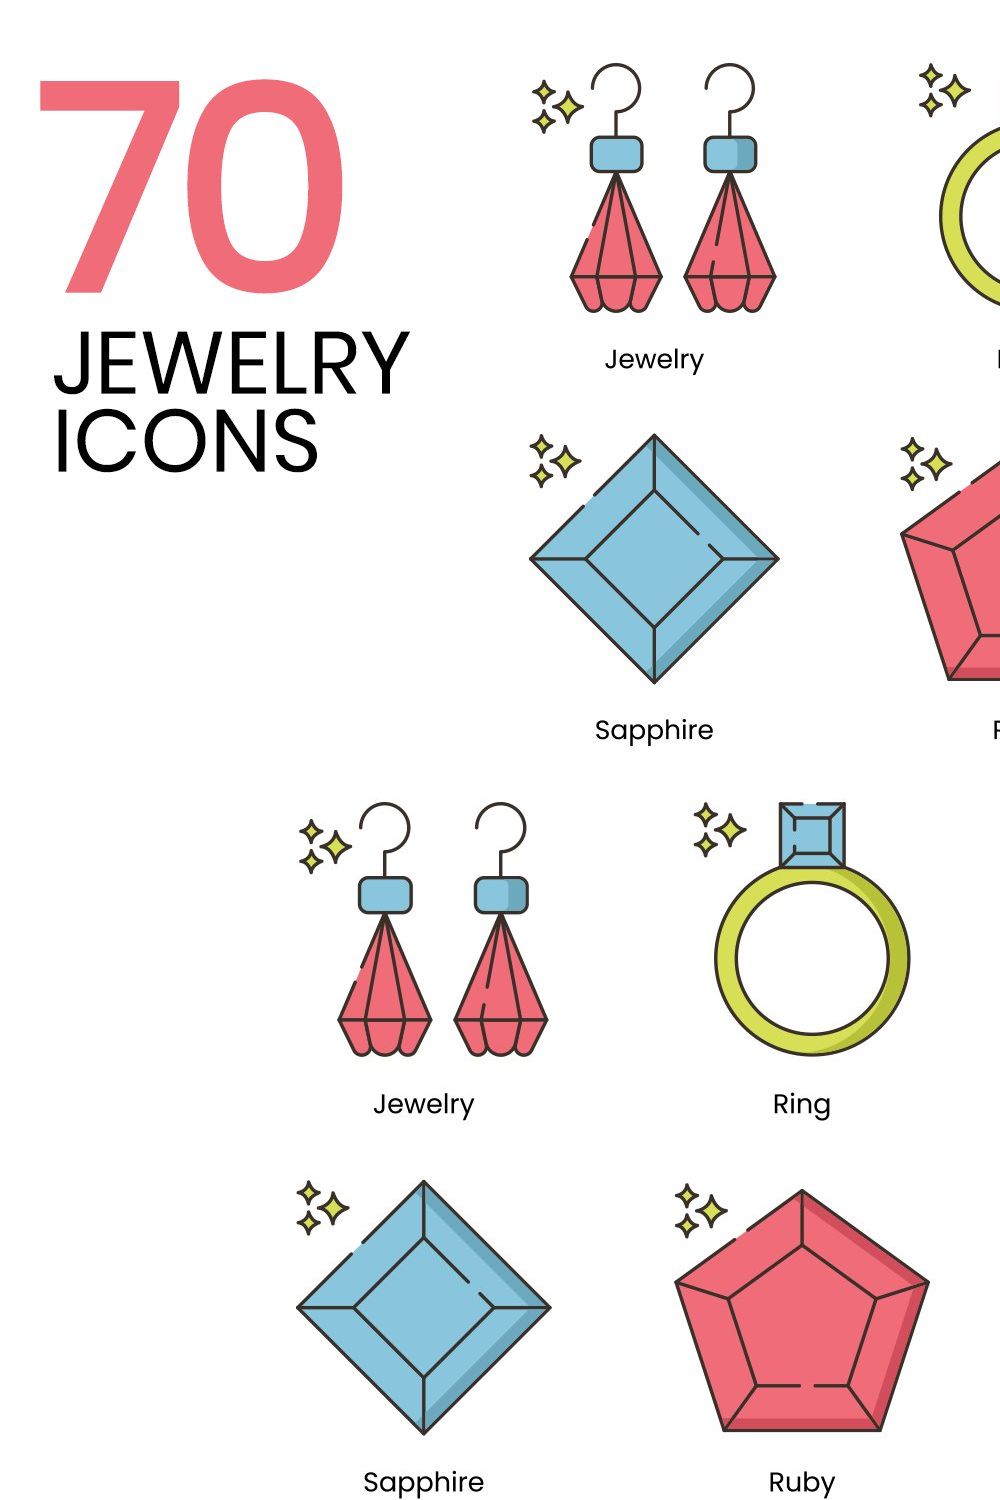 70 Jewelry Icons | Hazel pinterest preview image.